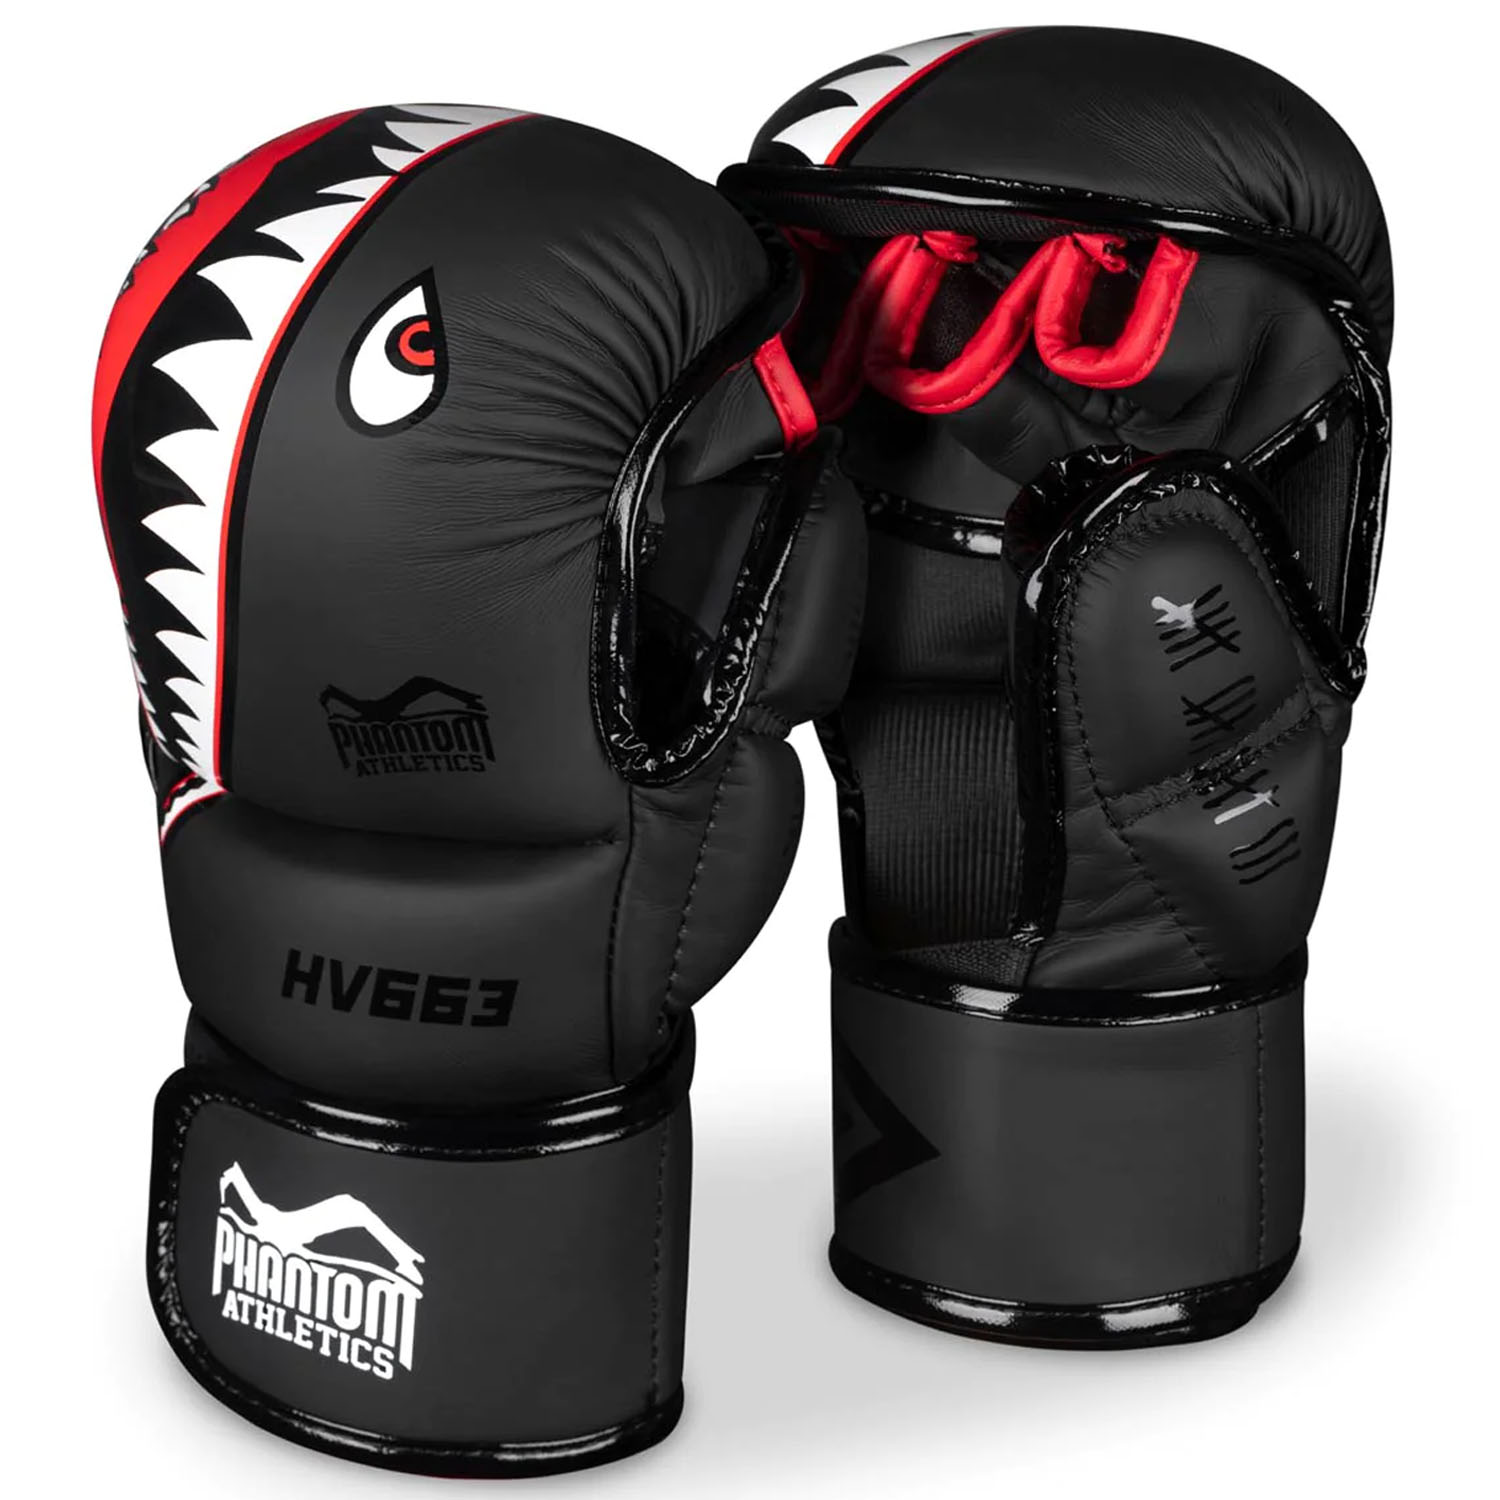 Phantom Athletics MMA Boxing Gloves, Fight Squad, Sparring, black